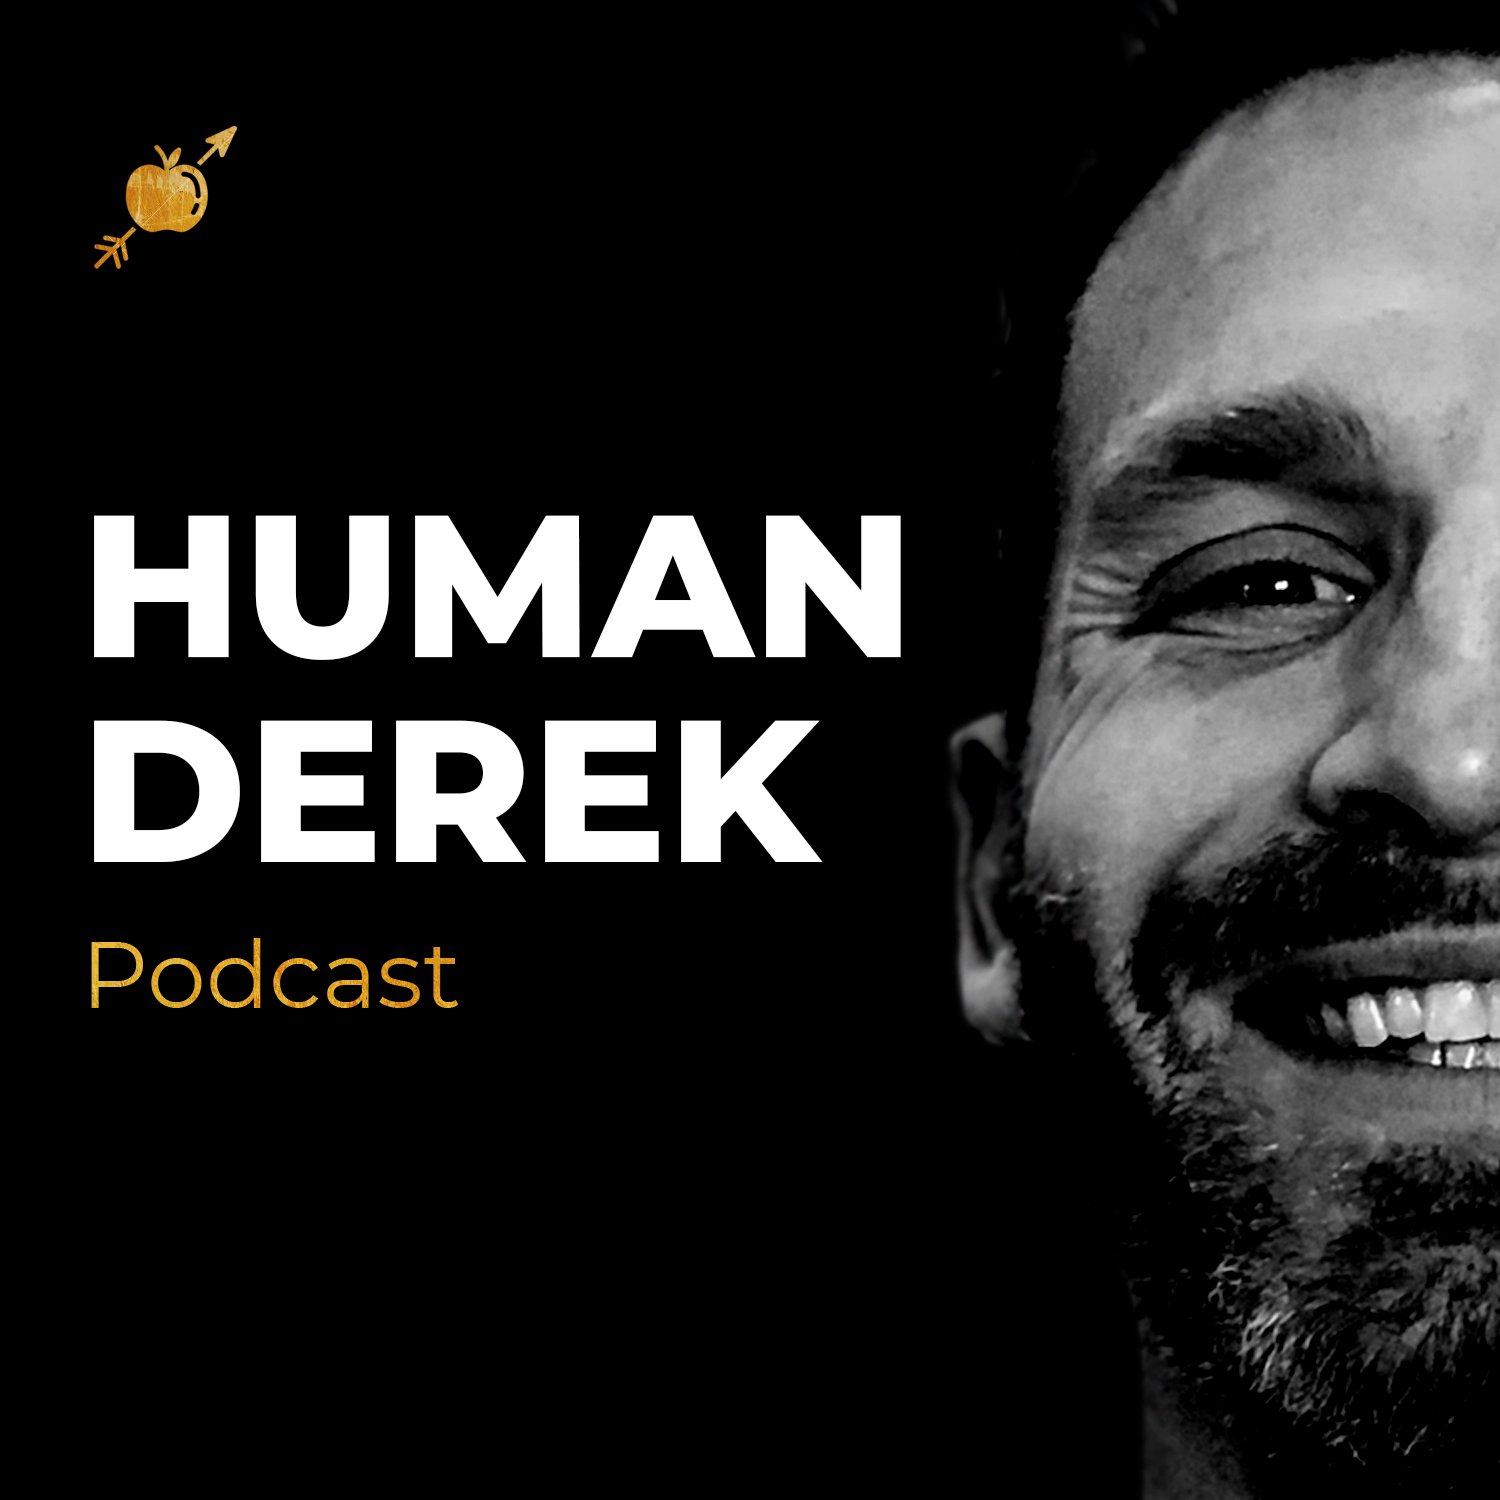 The Human Derek Podcast